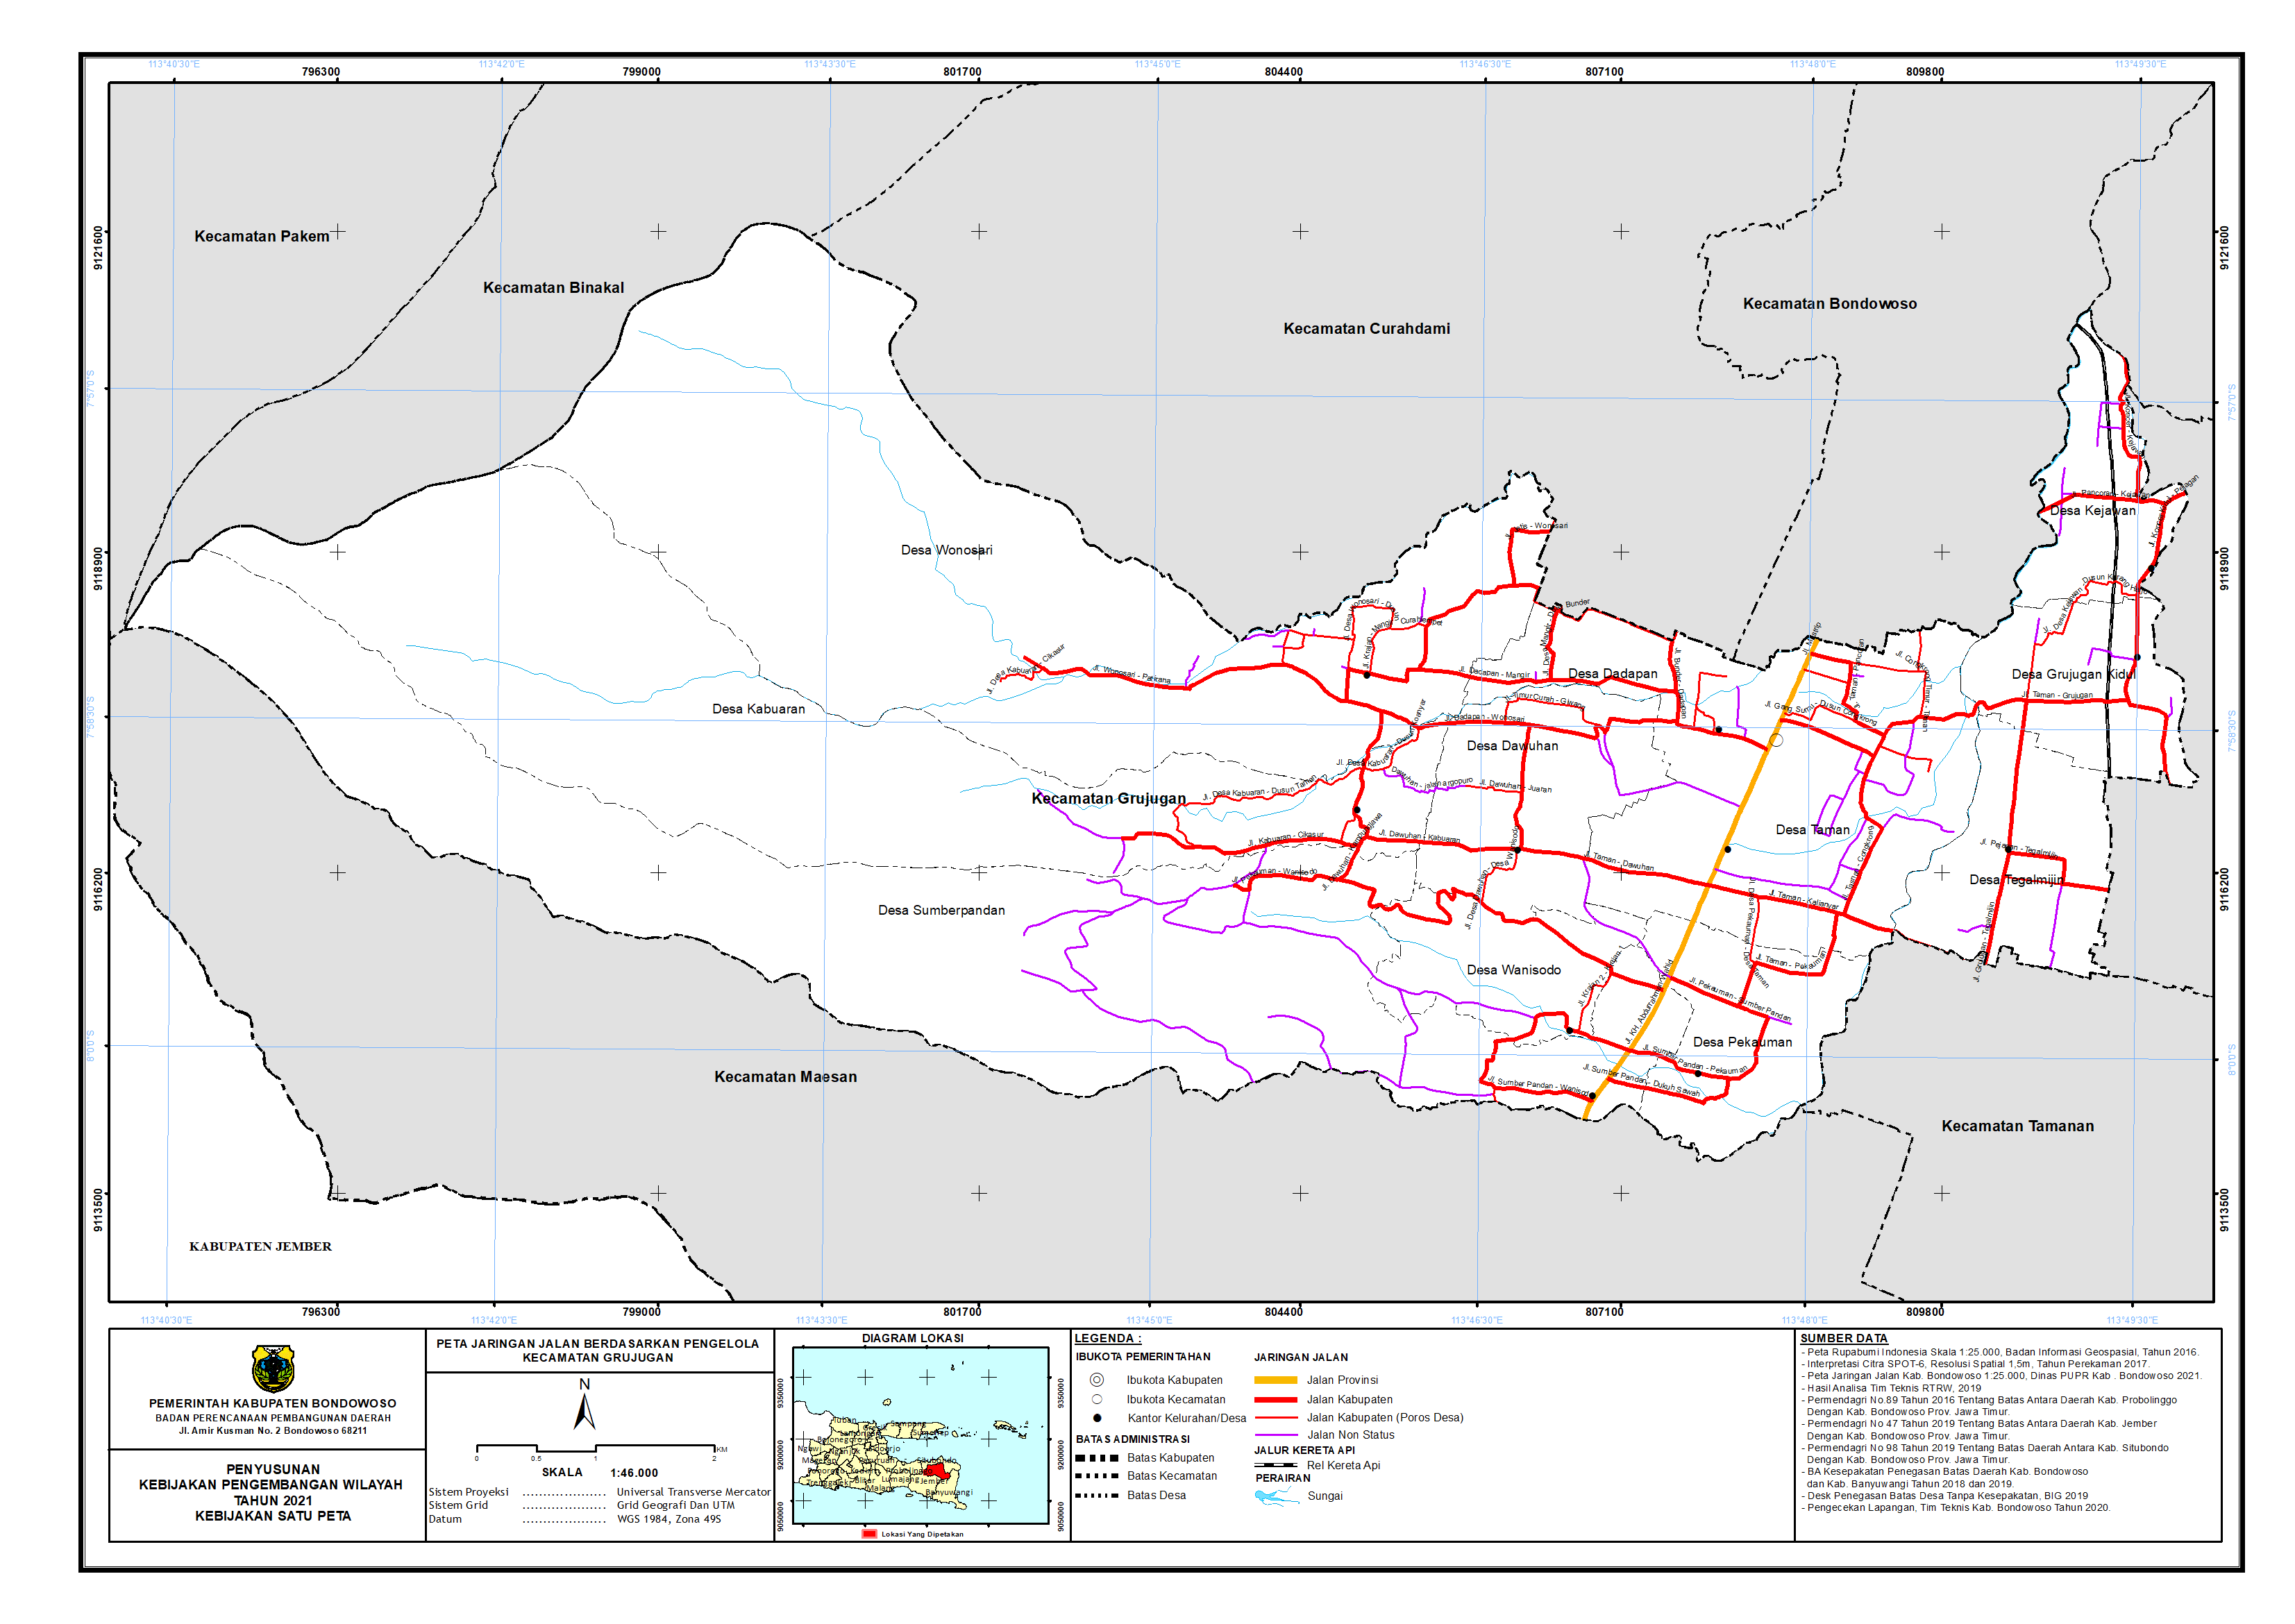 Peta Jaringan Jalan Berdasarkan Pengelola Kecamatan Grujugan.png